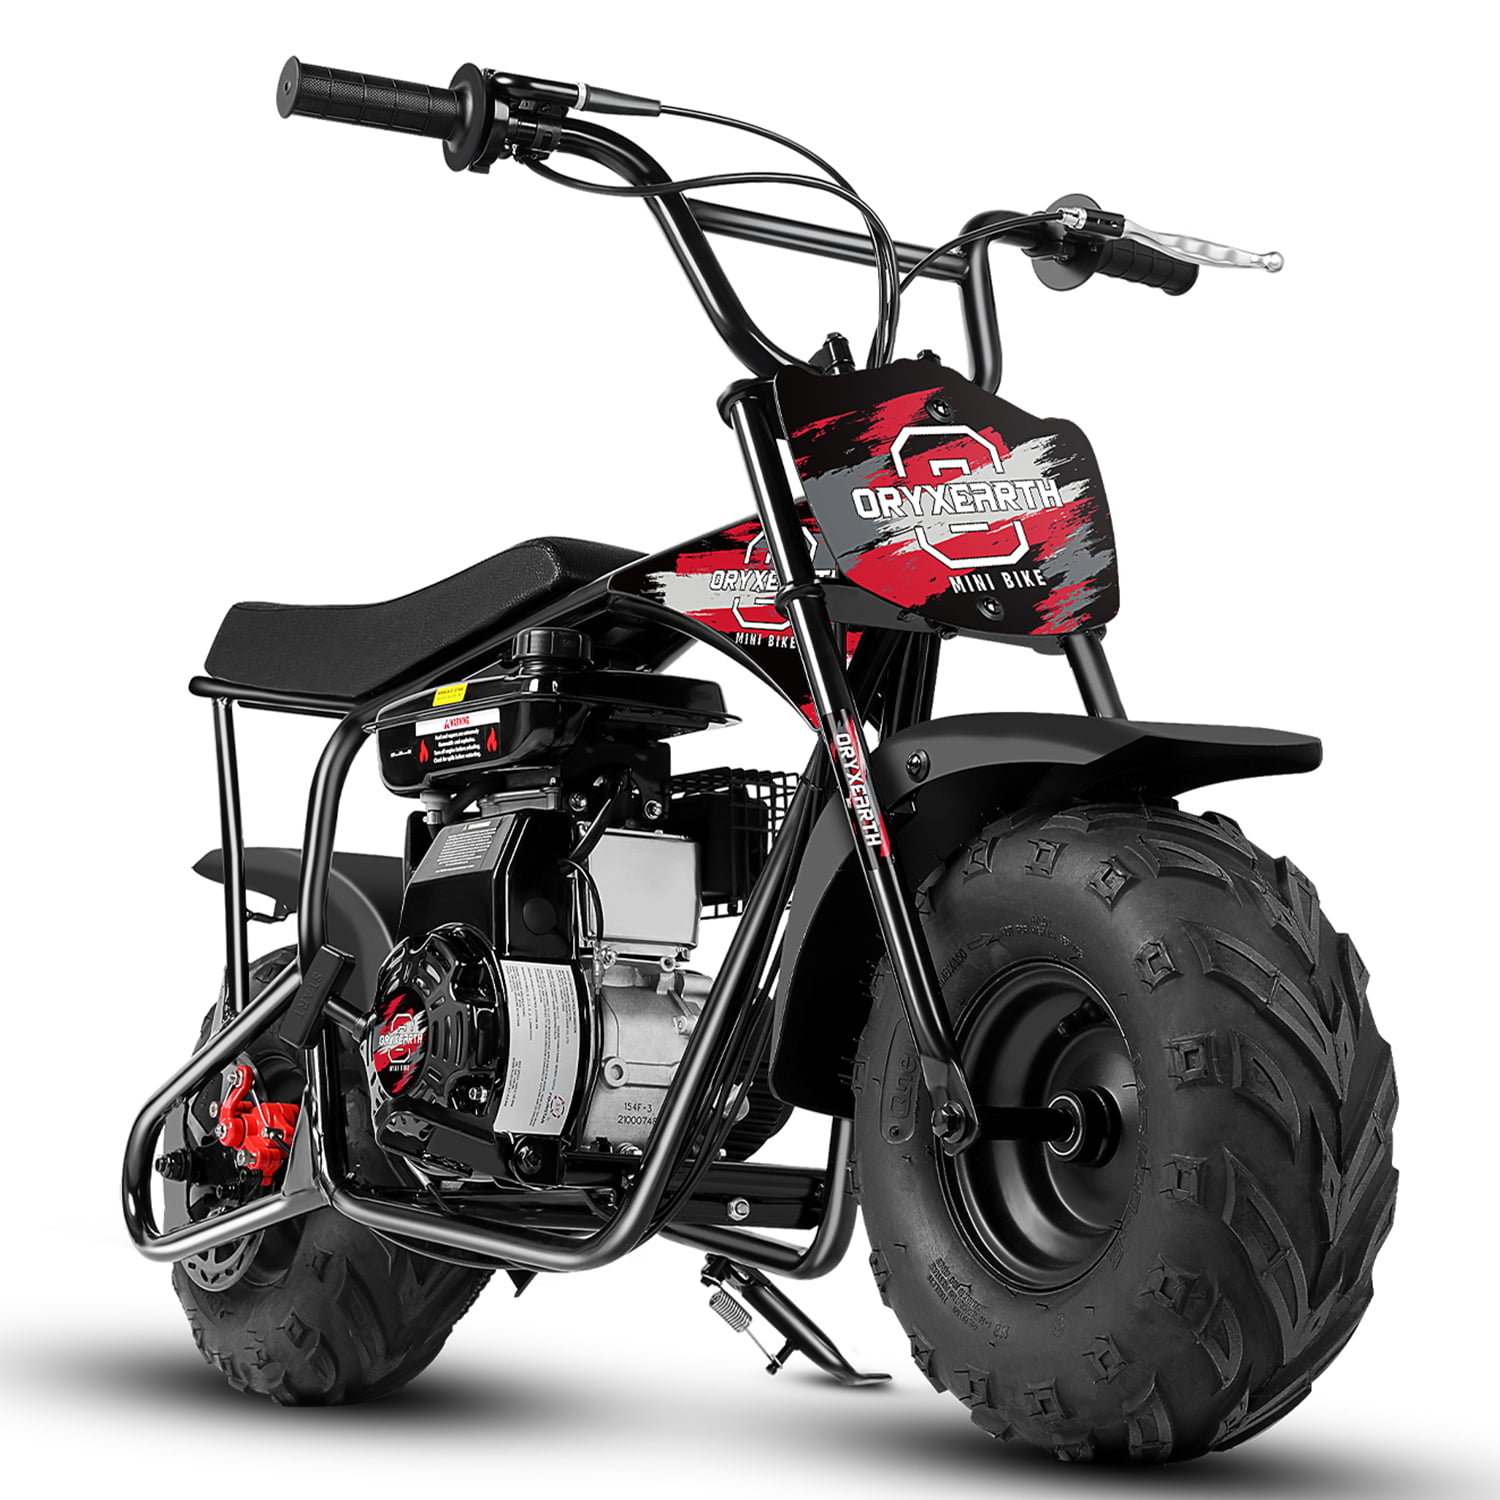 Oryxearth 105CC 4-Stroke Ride on Gas Power Motorcycle Dirt Bike